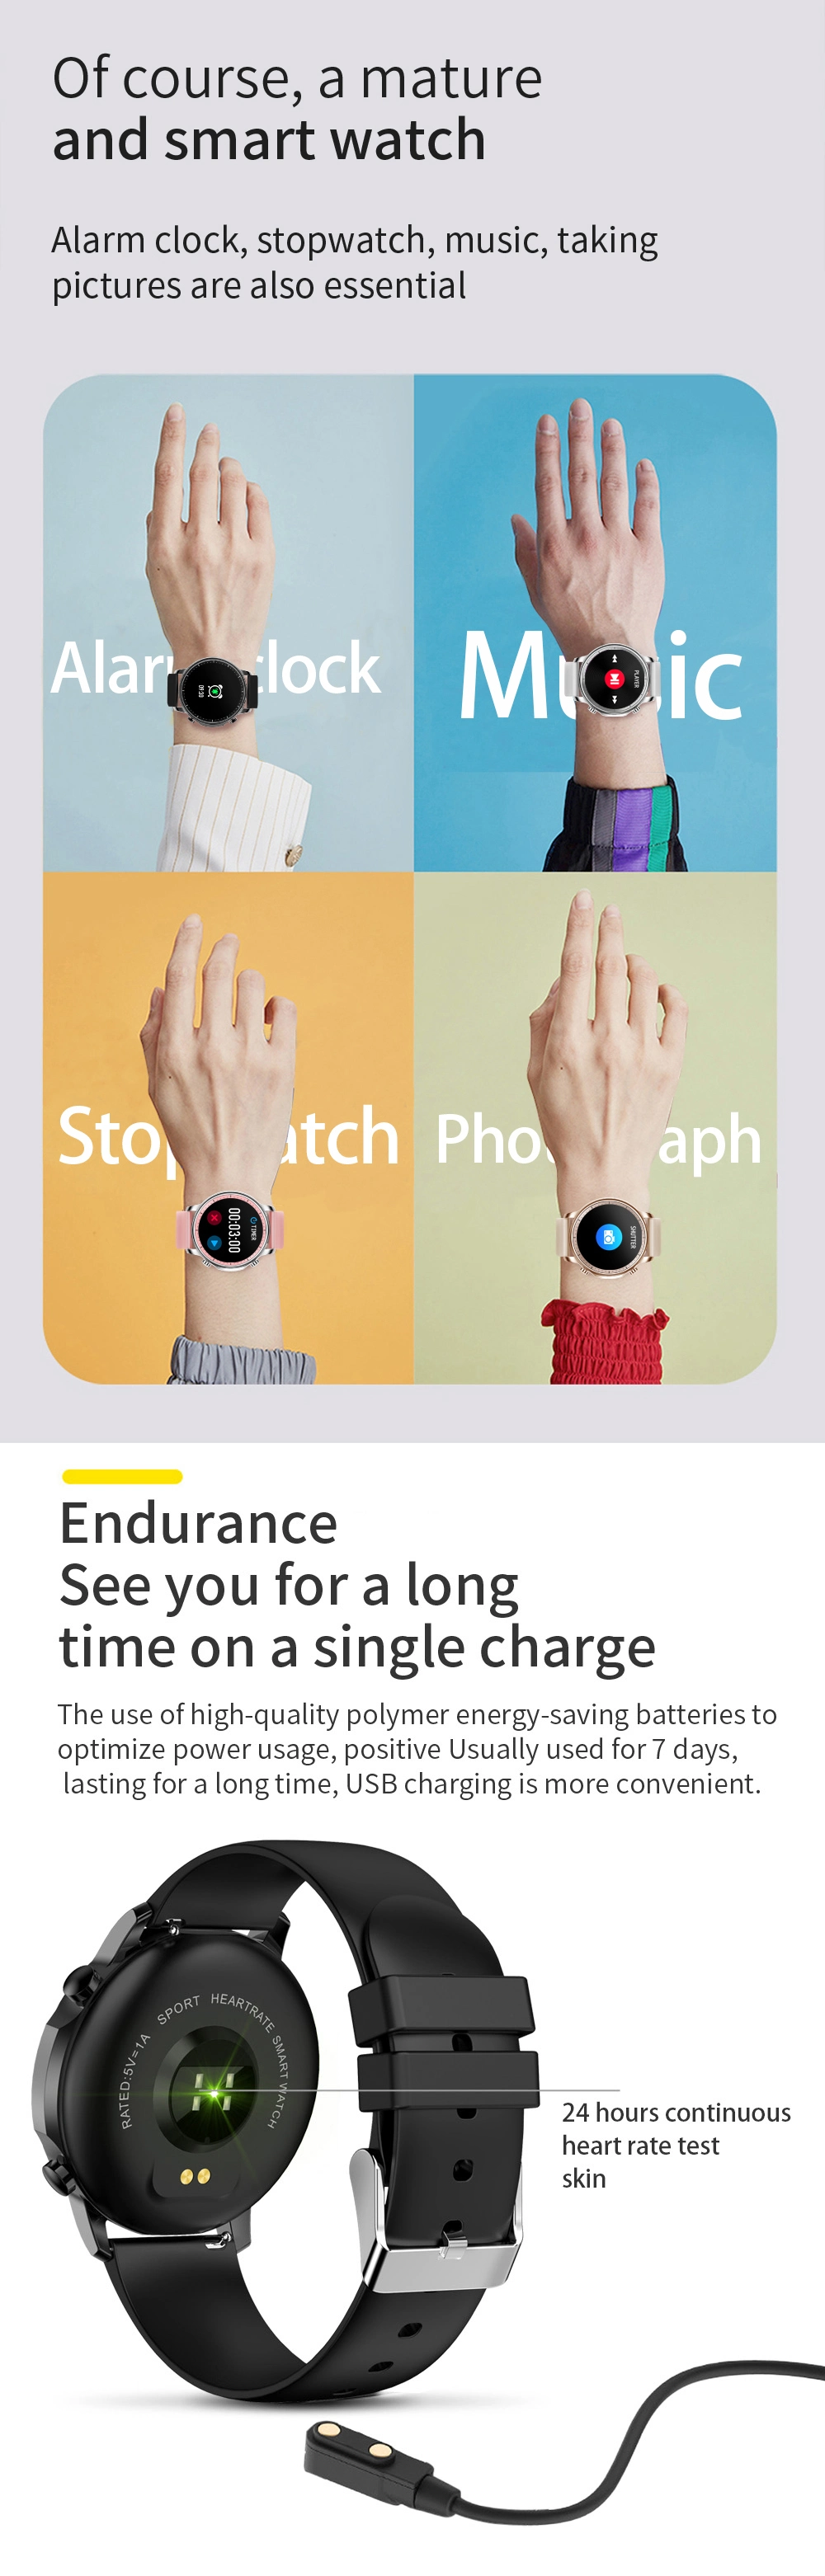 Gold Ladies Smart Watch Waterproof Health Weather Display Watches Bluetooth Women Smartwatch Bracelets